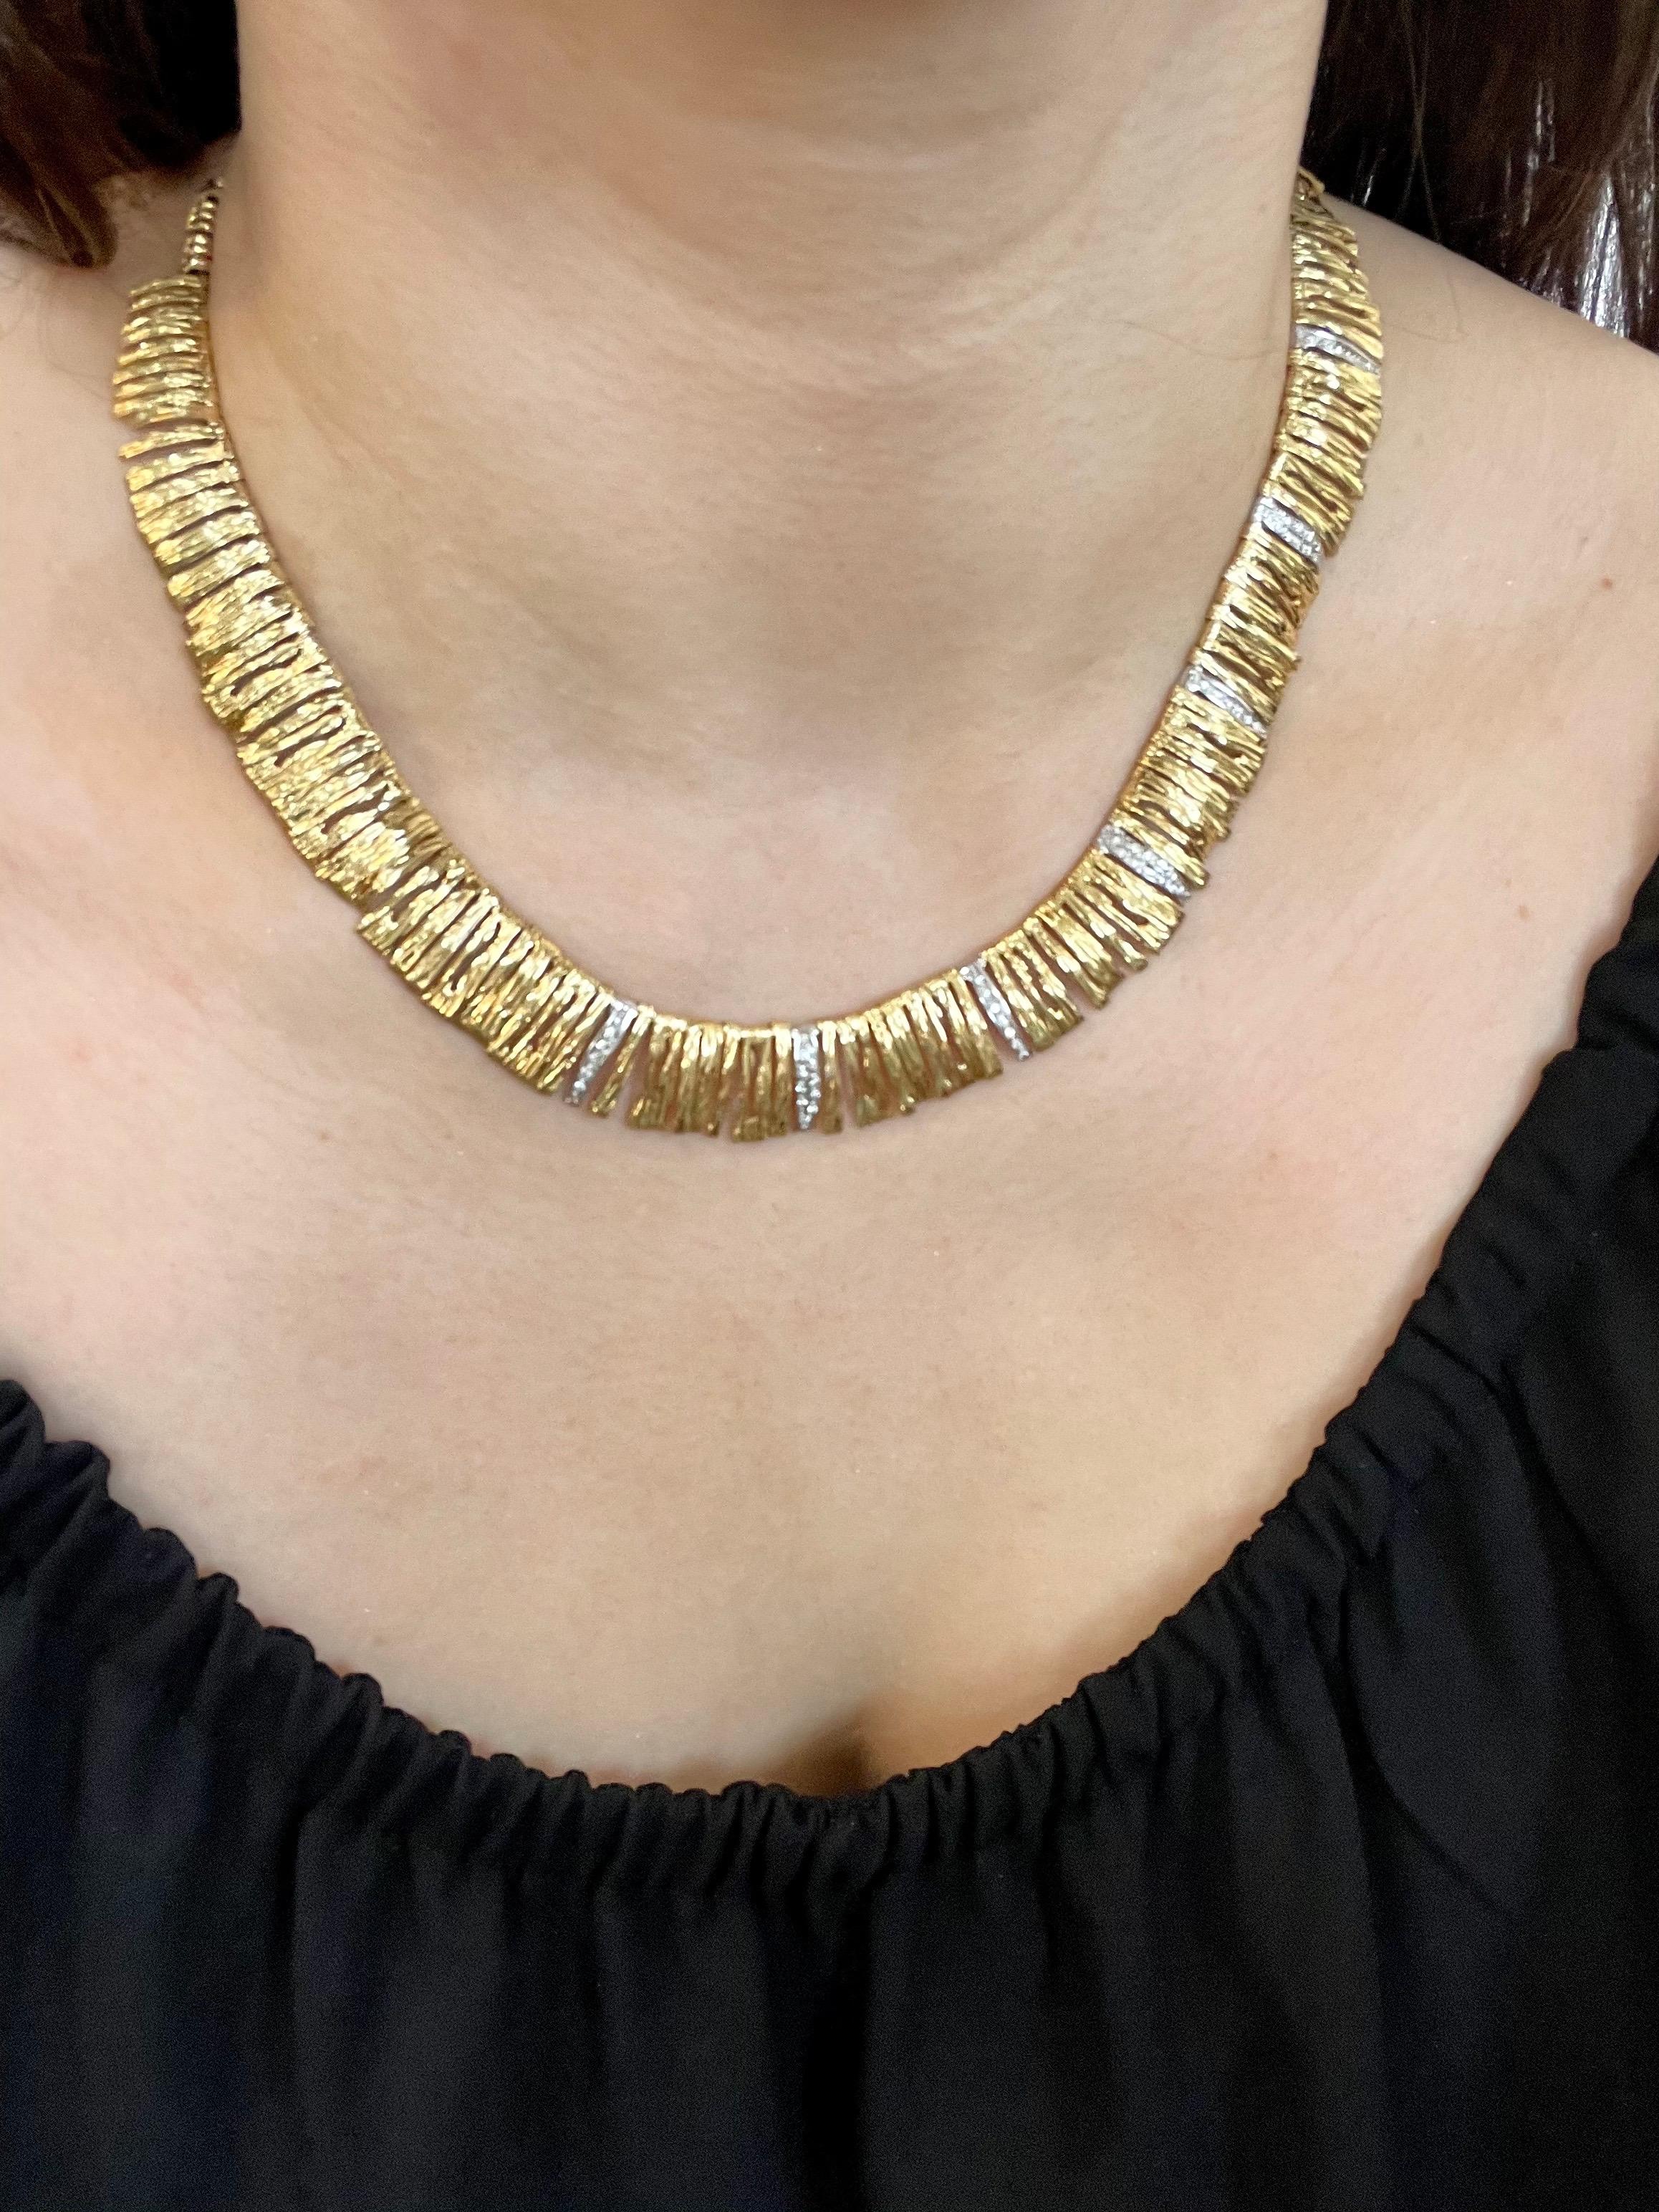 Designer Roberto Coin Diamond Elephant Skin Necklace, 18 Karat Gold 53 Grams For Sale 1